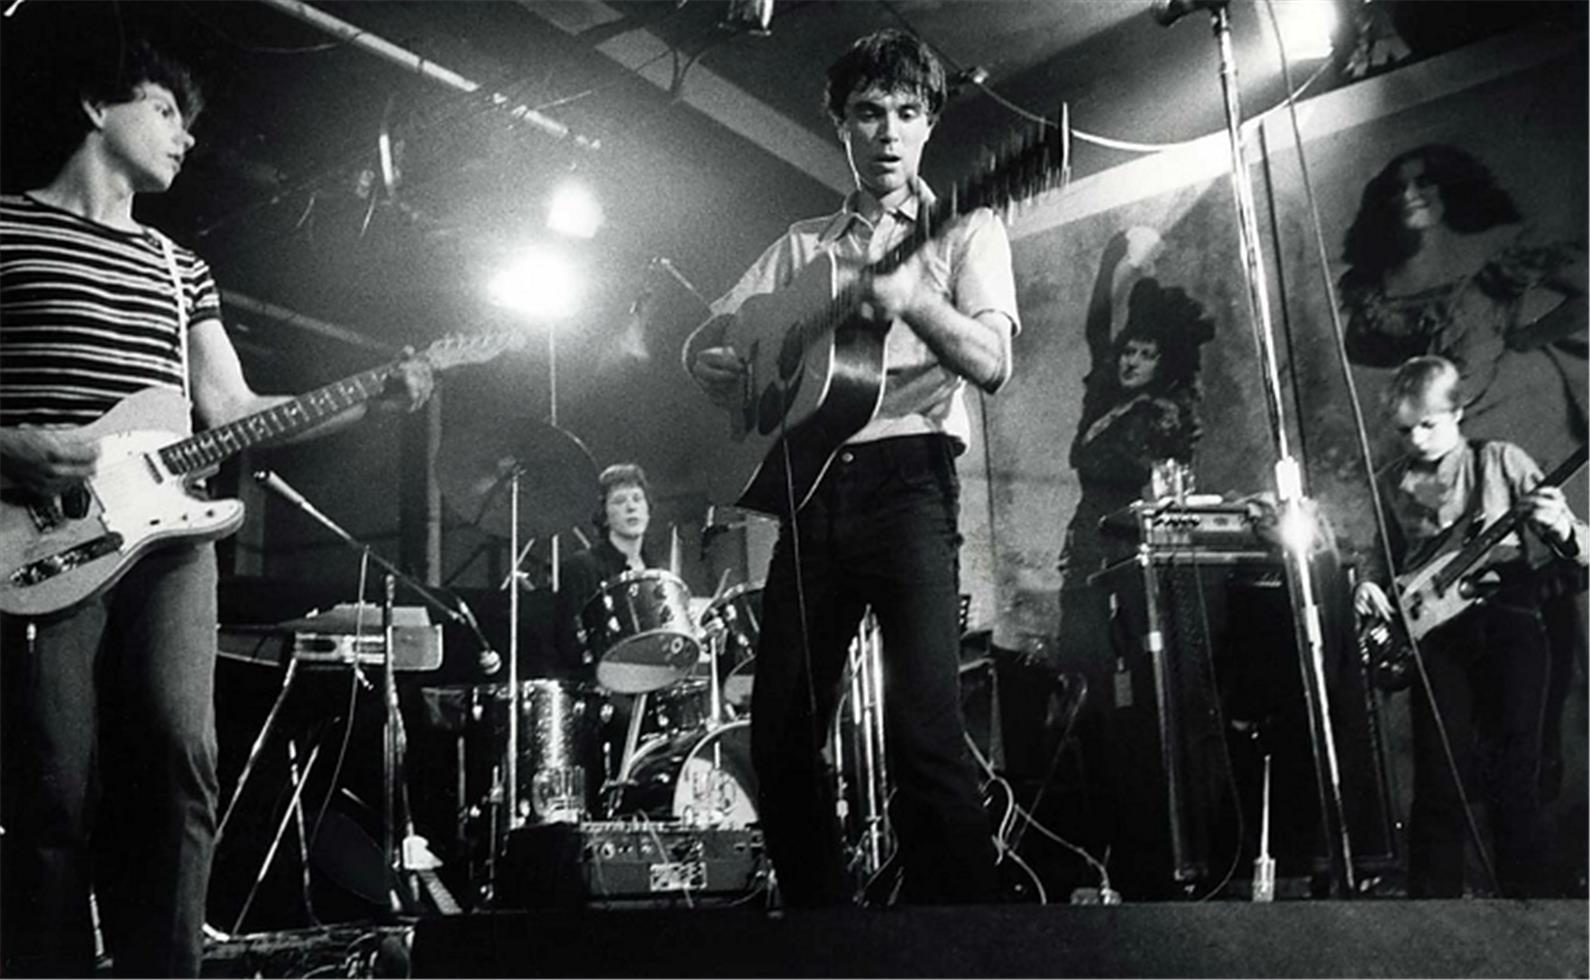 David Godlis Black and White Photograph - Talking Heads, CBGB, NYC, 1977